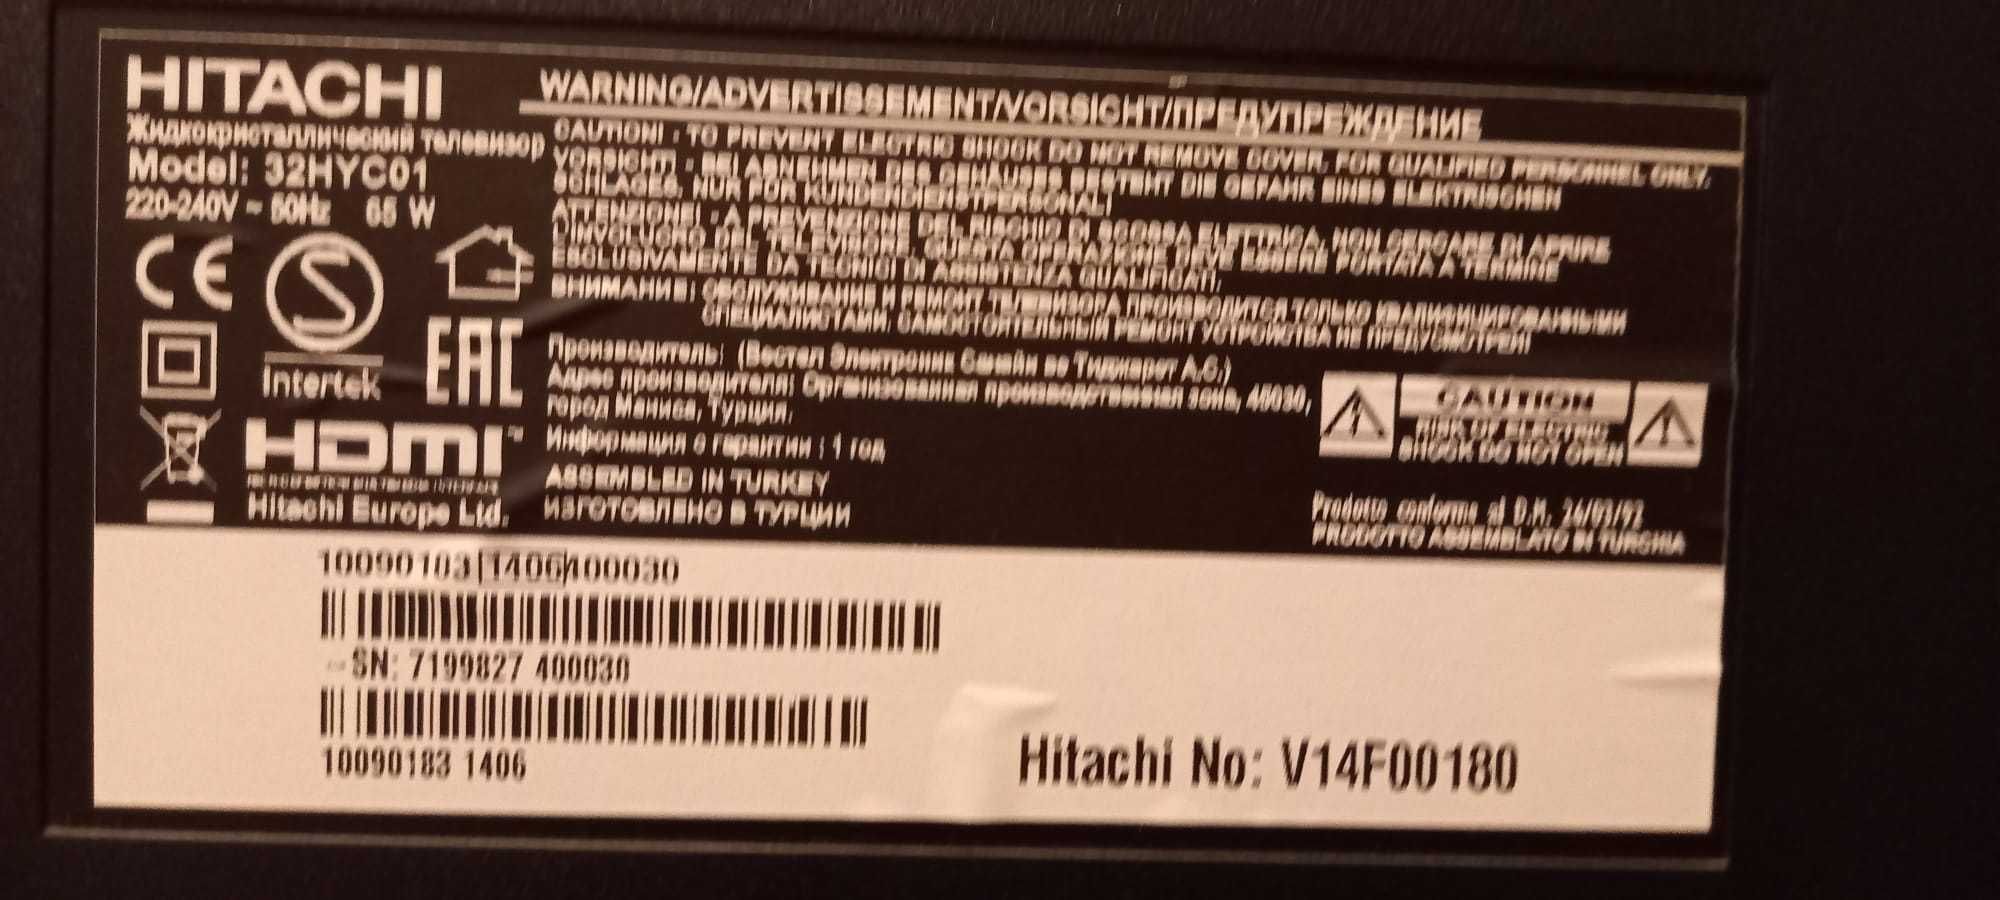 TV Hitachi 32HYC01